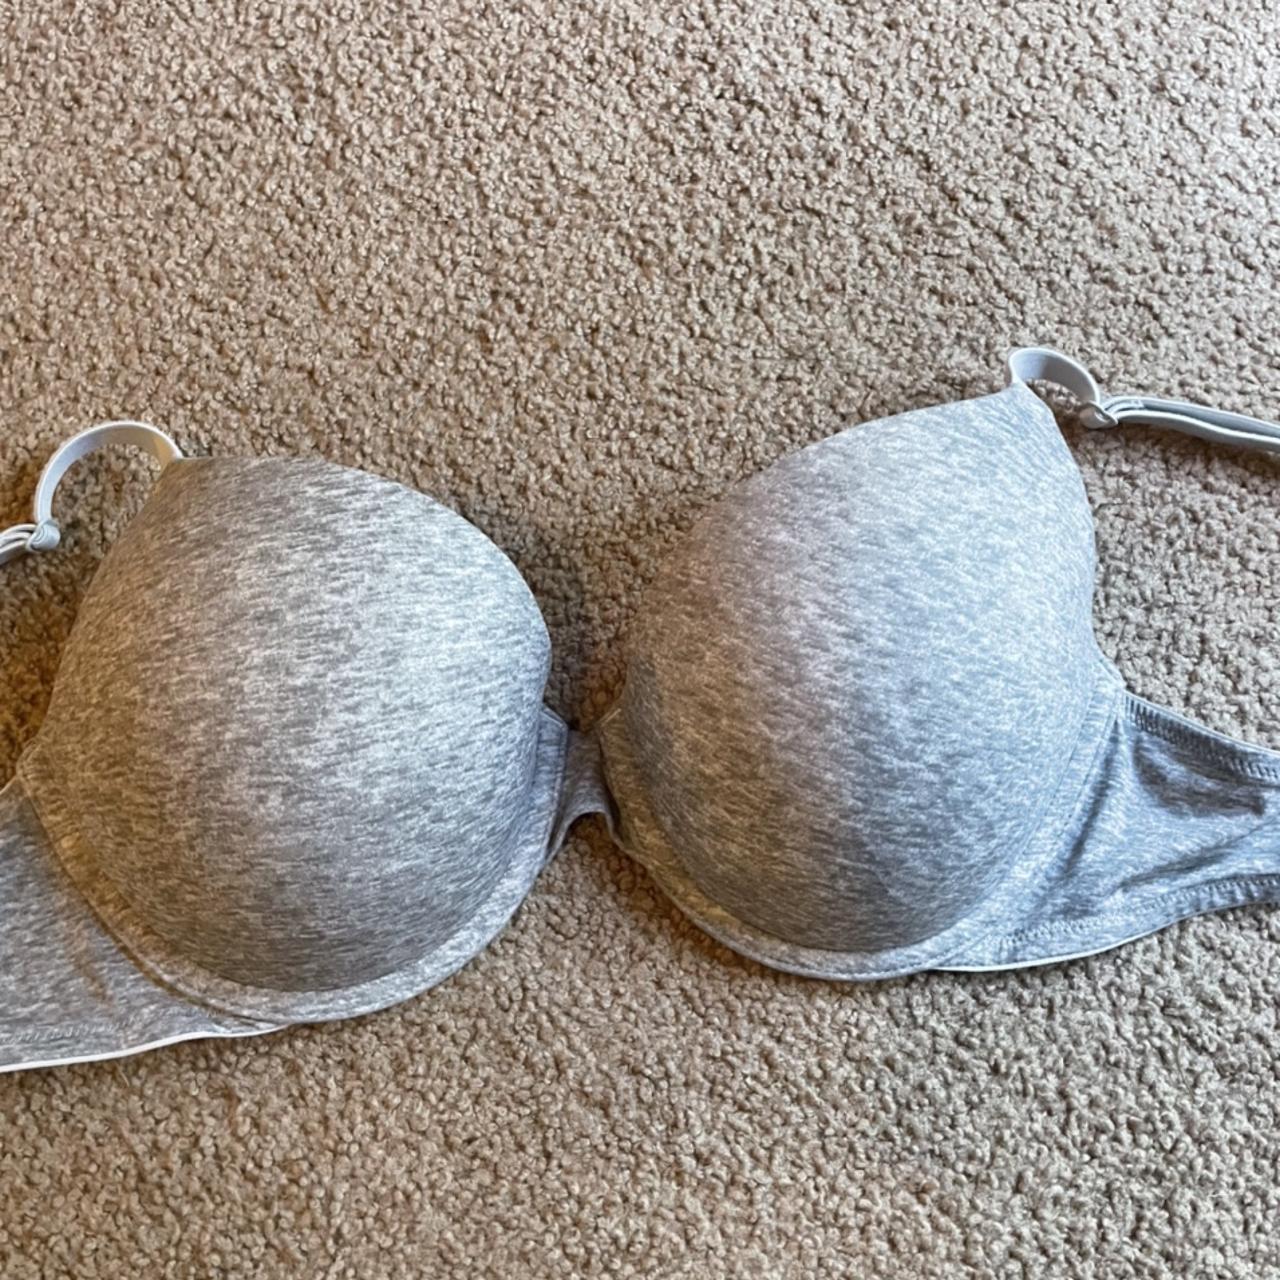 34D light gray Victoria's secret's pink bra. Worn - Depop